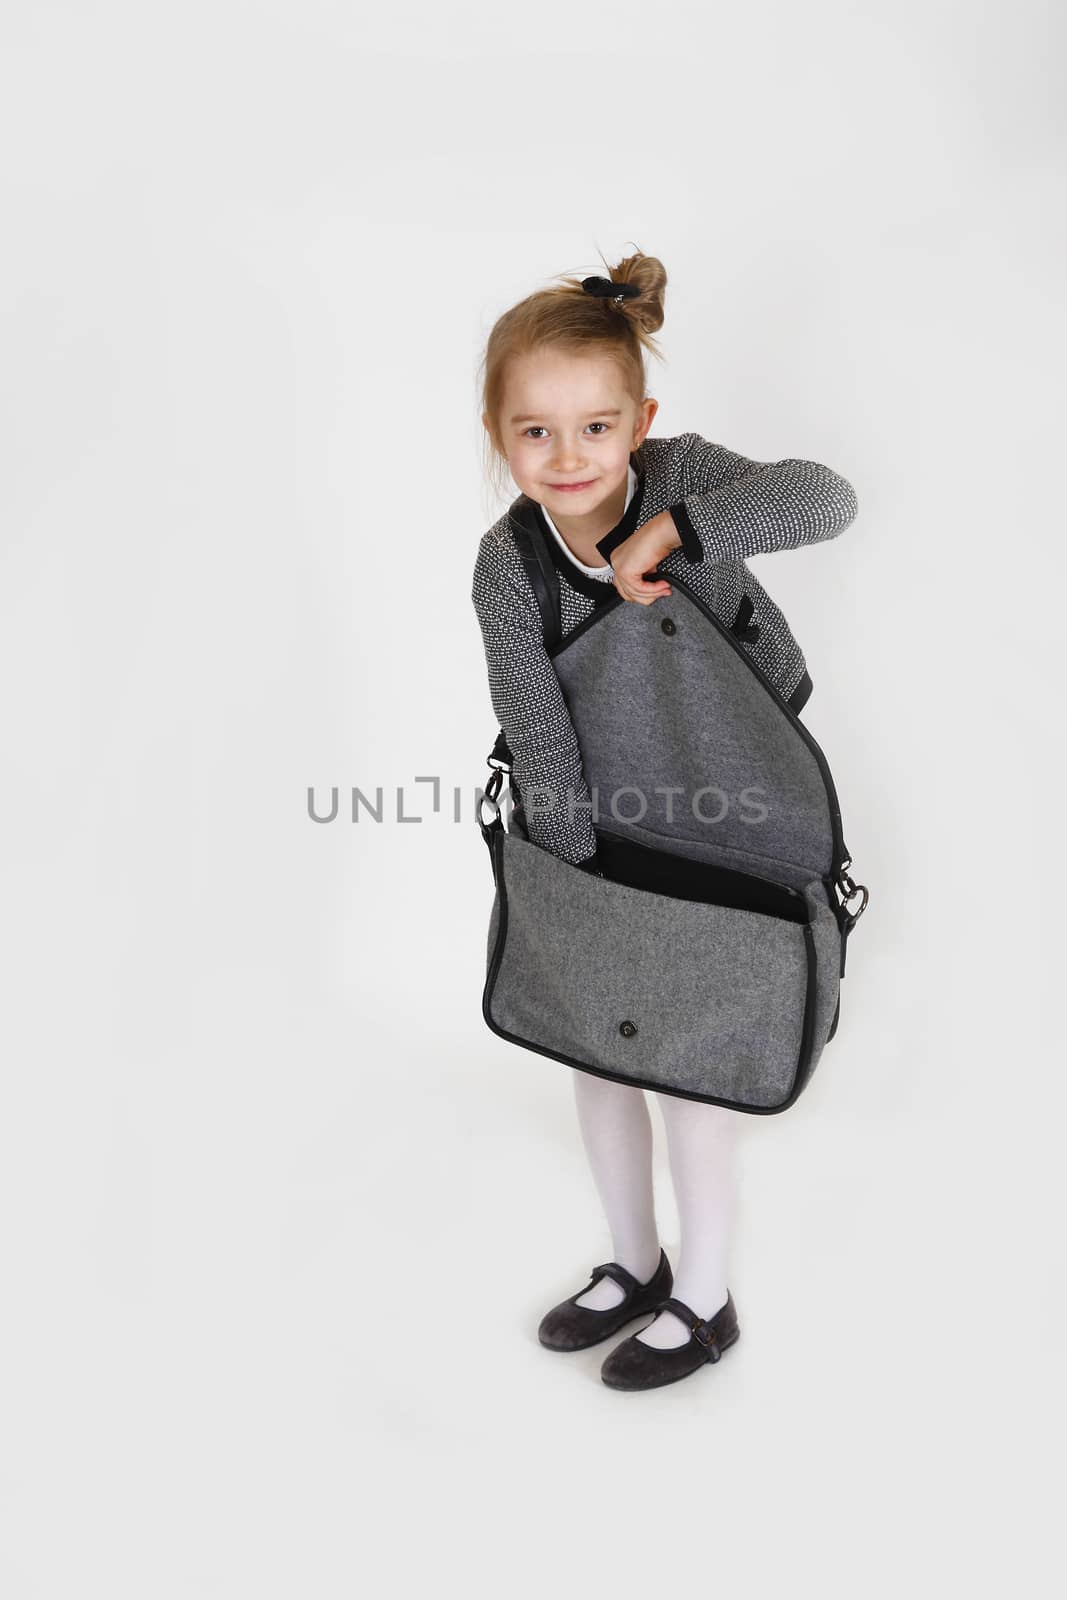 Young girl with handbag by DigiArtFoto